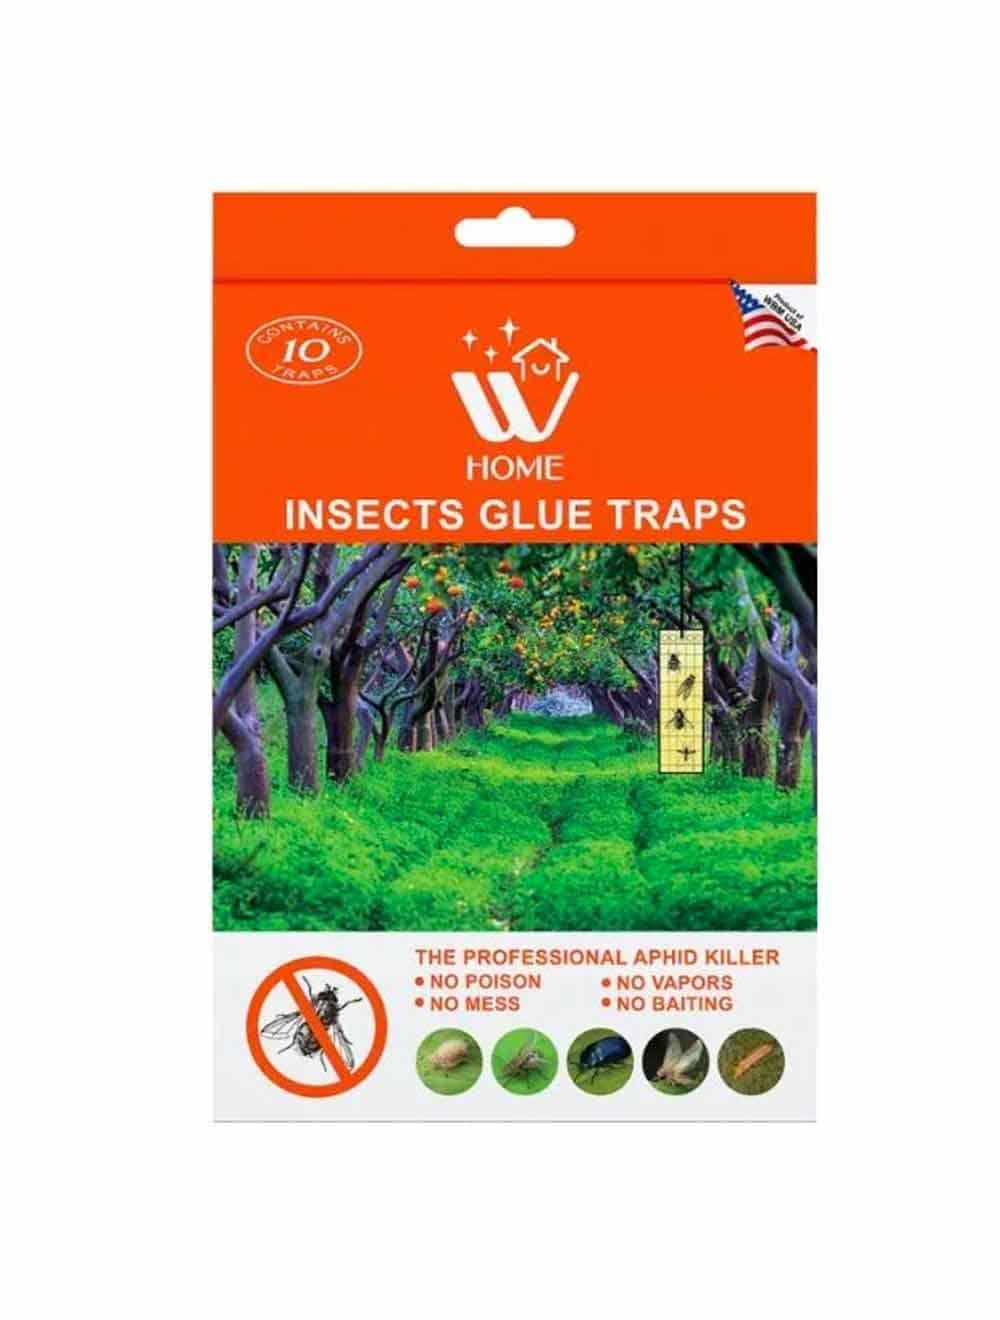 insects-glue-trap-_-wbm-home-589b9e5b